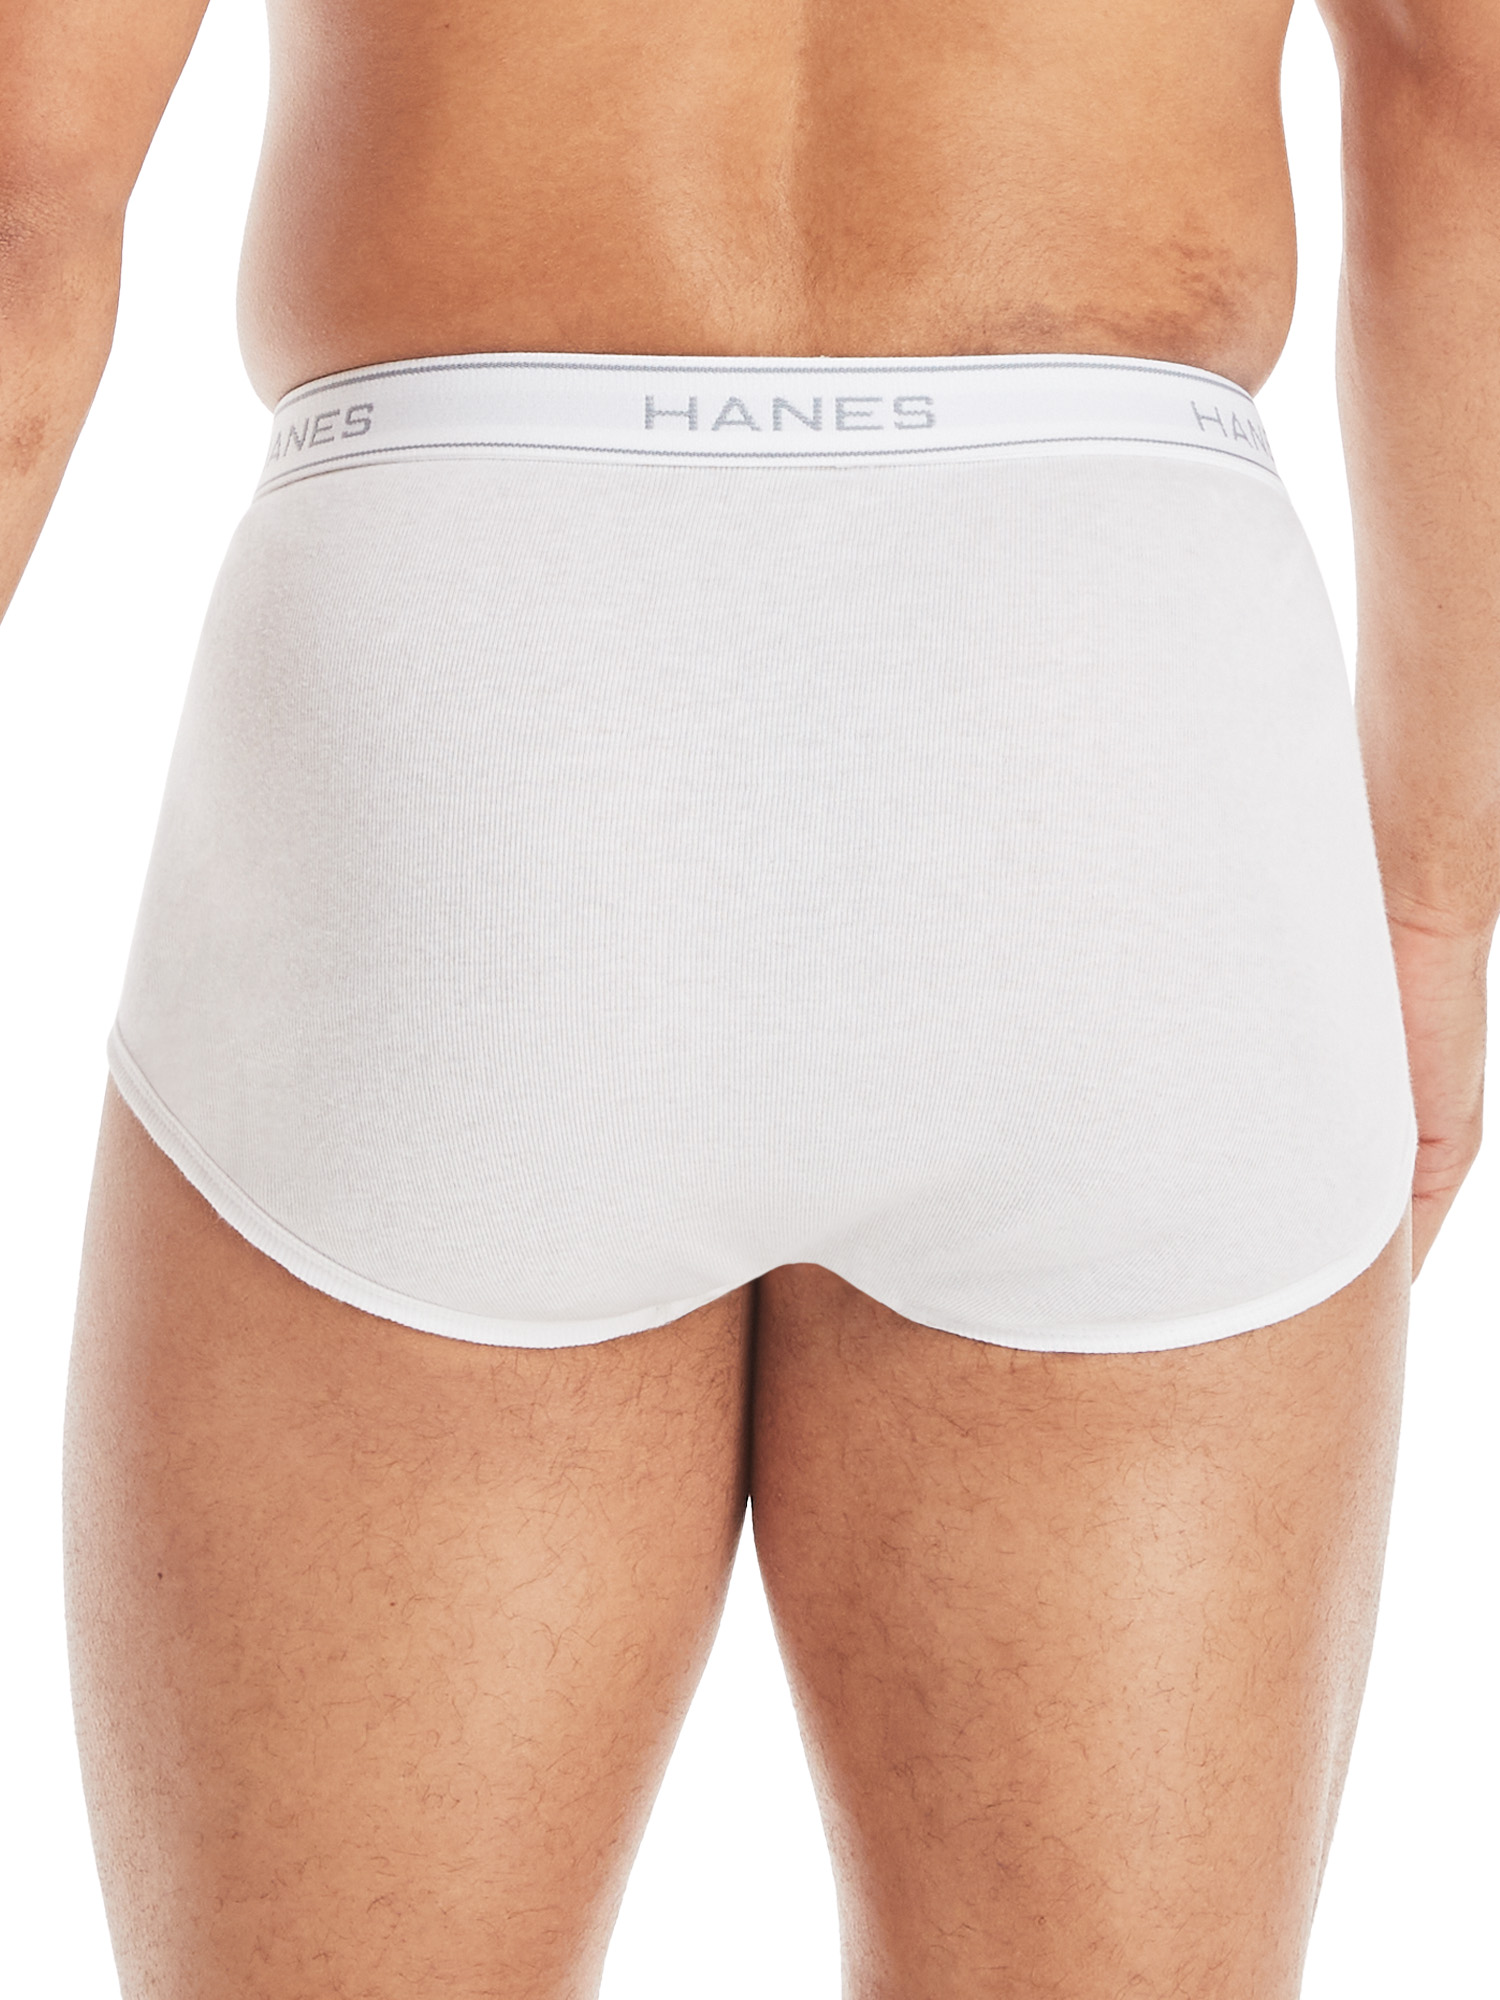 Hanes Men's Value Pack White Briefs, 6 Pack - image 4 of 9